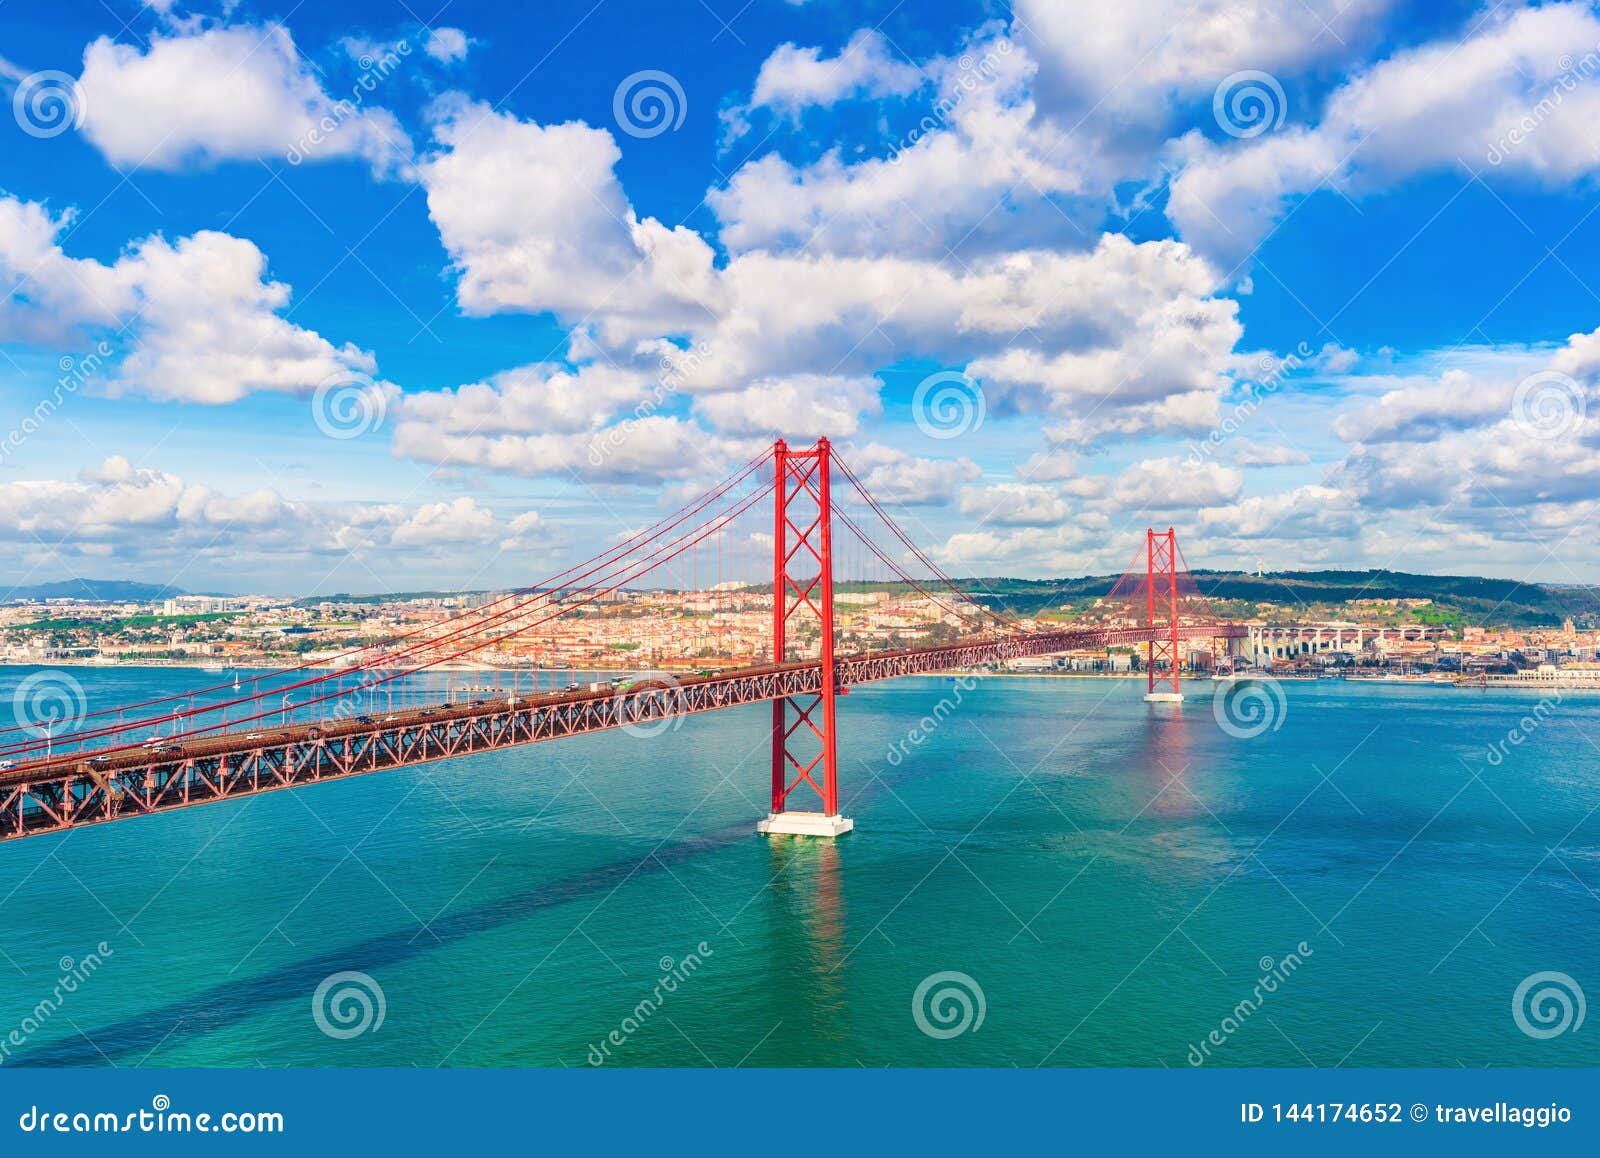 the 25th april bridge ponte 25 de abril between lisbon and almada, portugal. one of the longest suspension bridges in europe